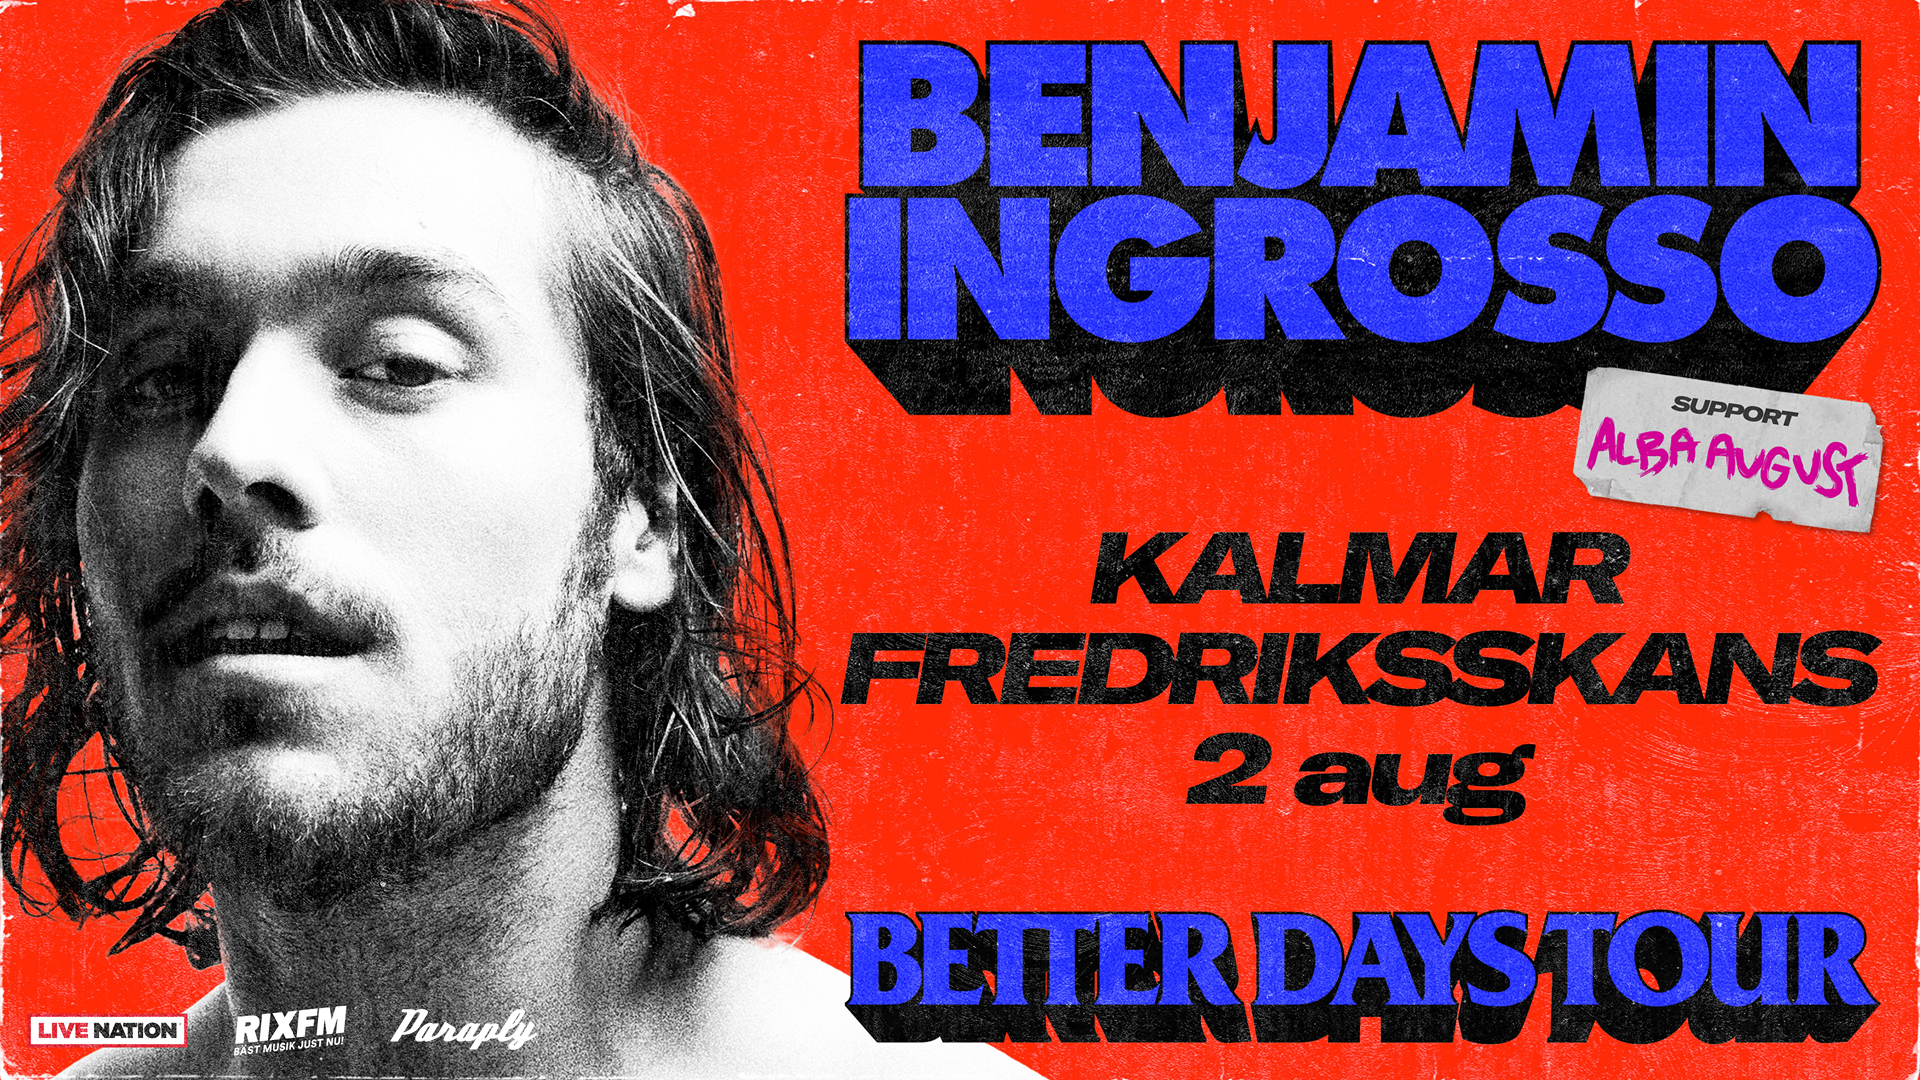 Benjamin Ingrosso - Better Days Tour